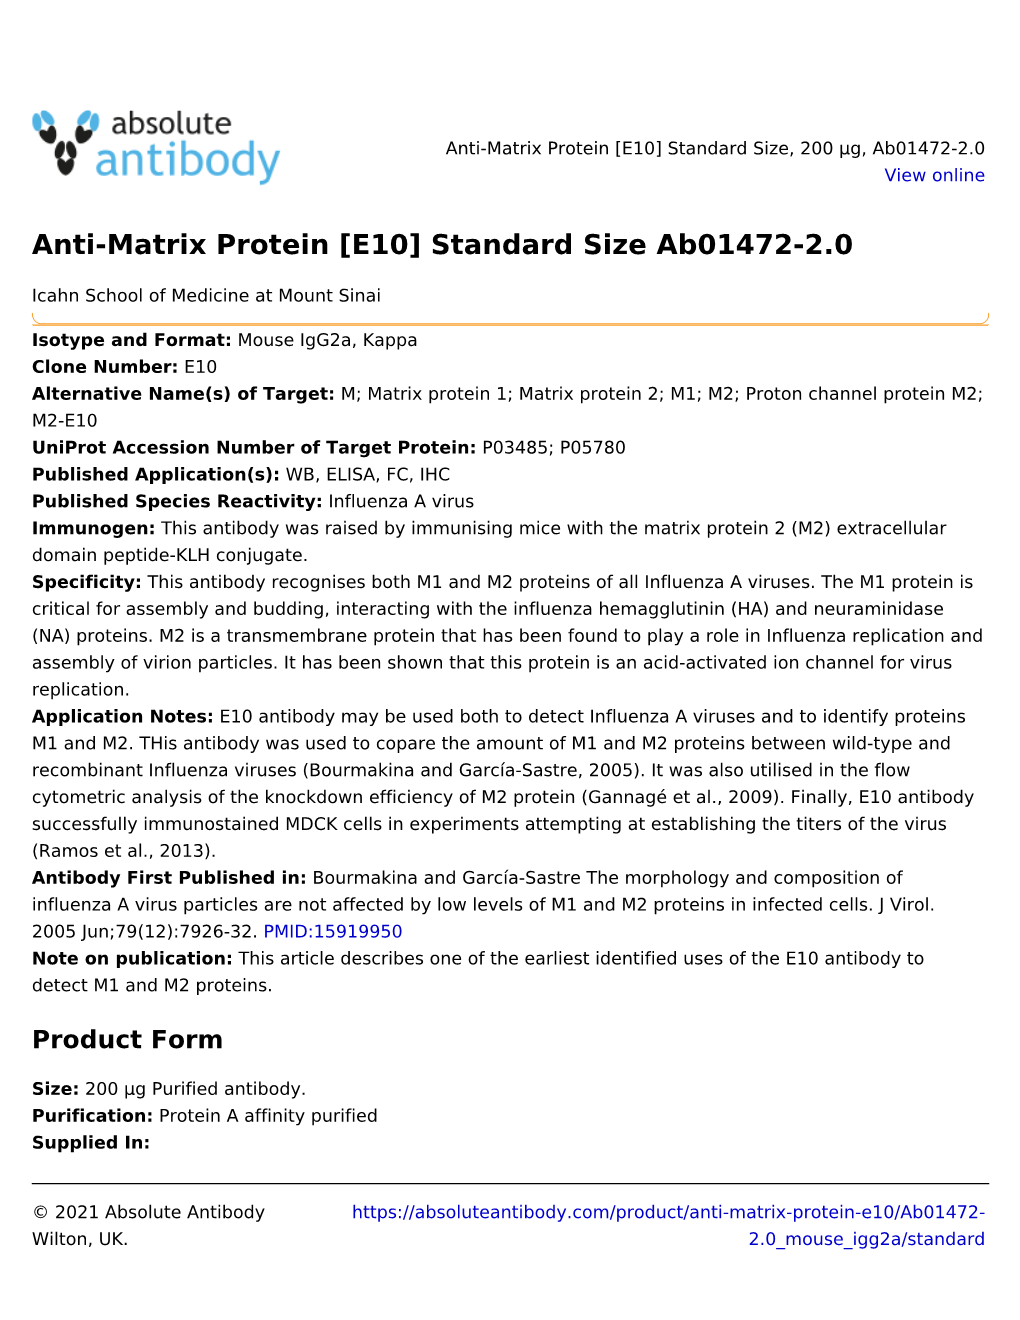 Anti-Matrix Protein [E10] Standard Size Ab01472-2.0